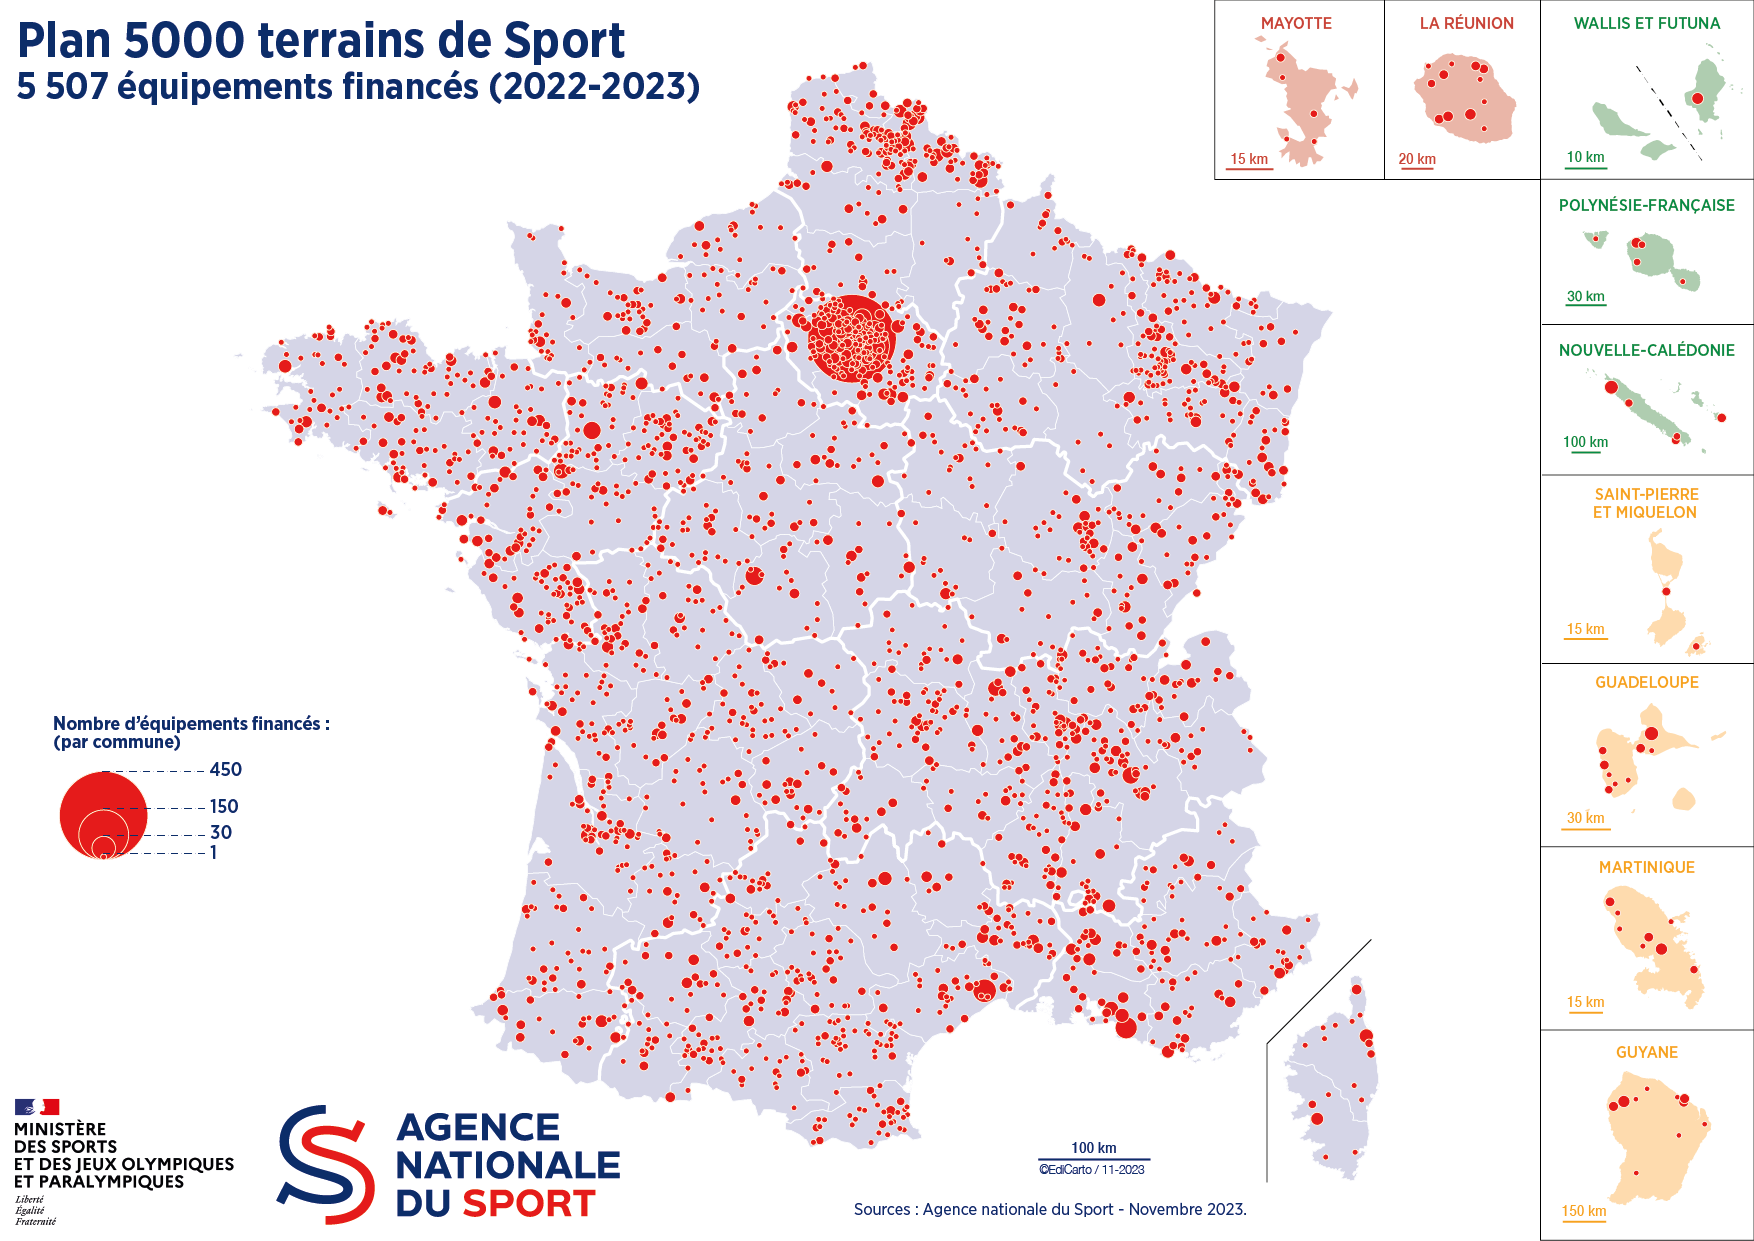 Bilan du Plan 5000 Terrains de Sport 2022-2023